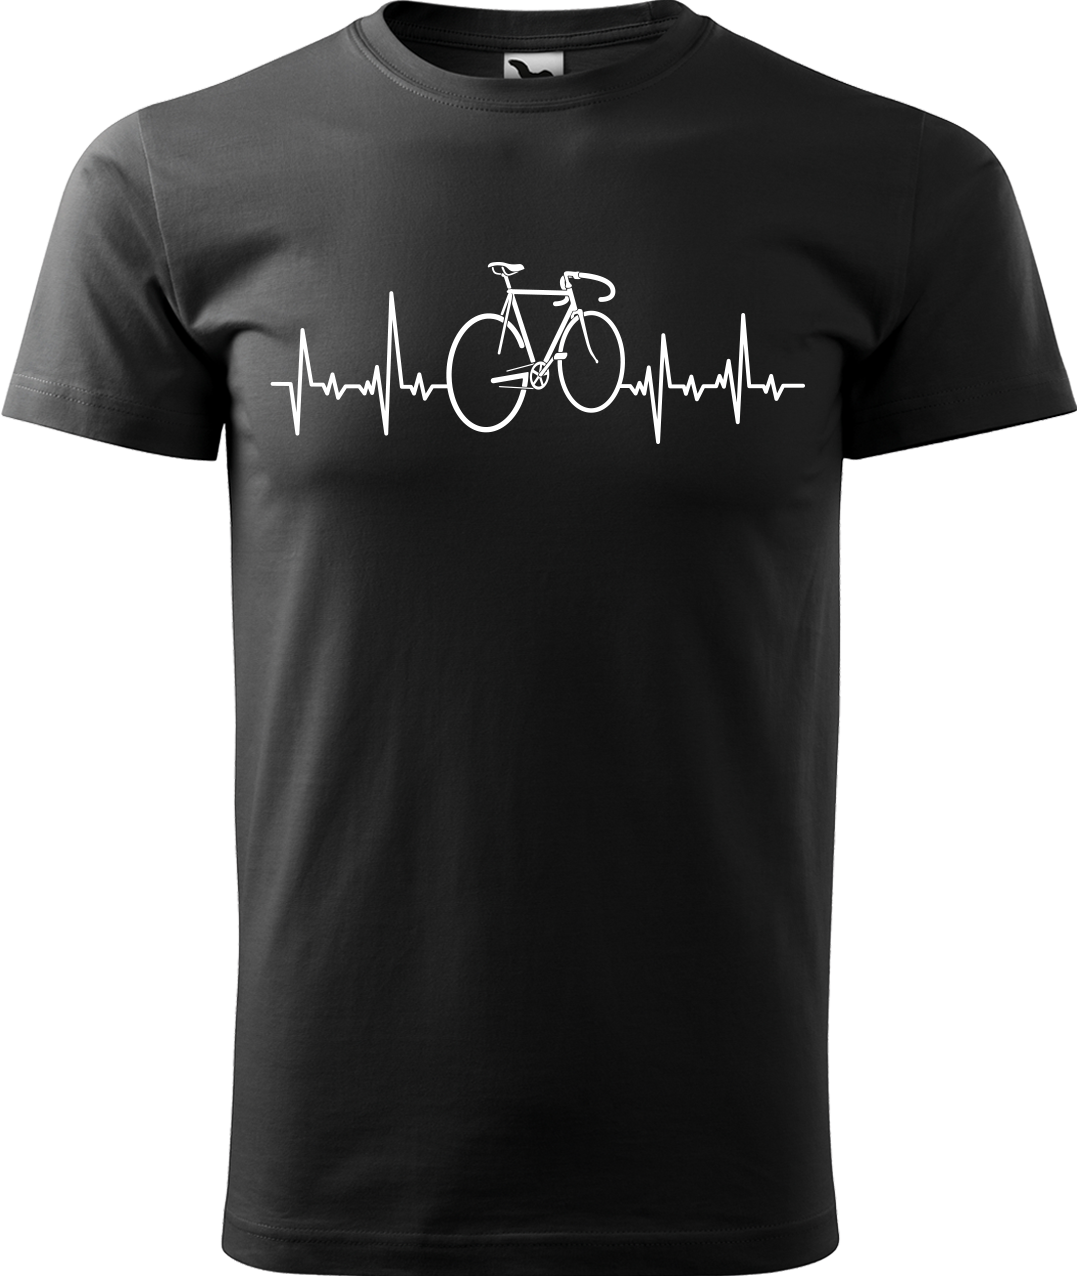 Pánské tričko s kolem - Cyklistův kardiogram Velikost: XL, Barva: Černá (01)